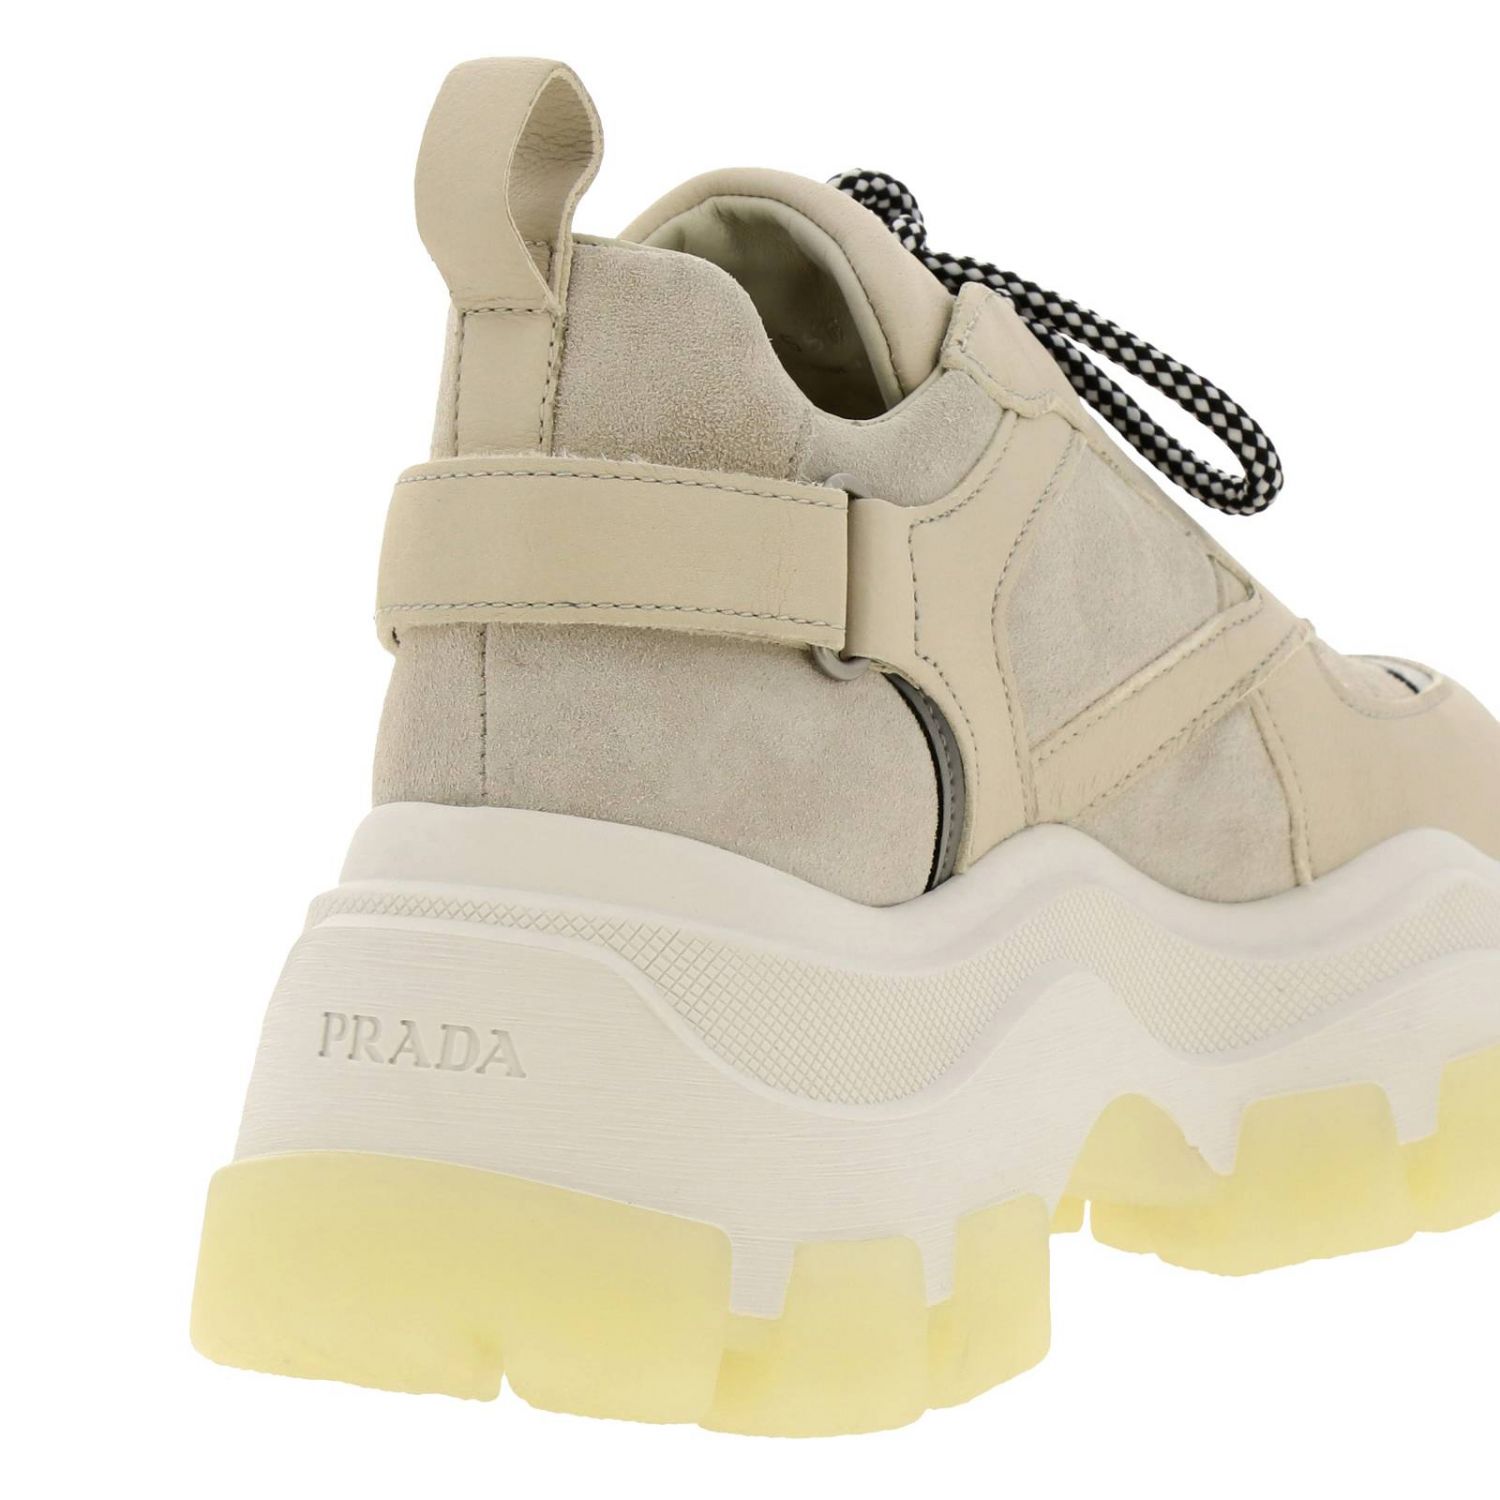 prada reflective sneakers